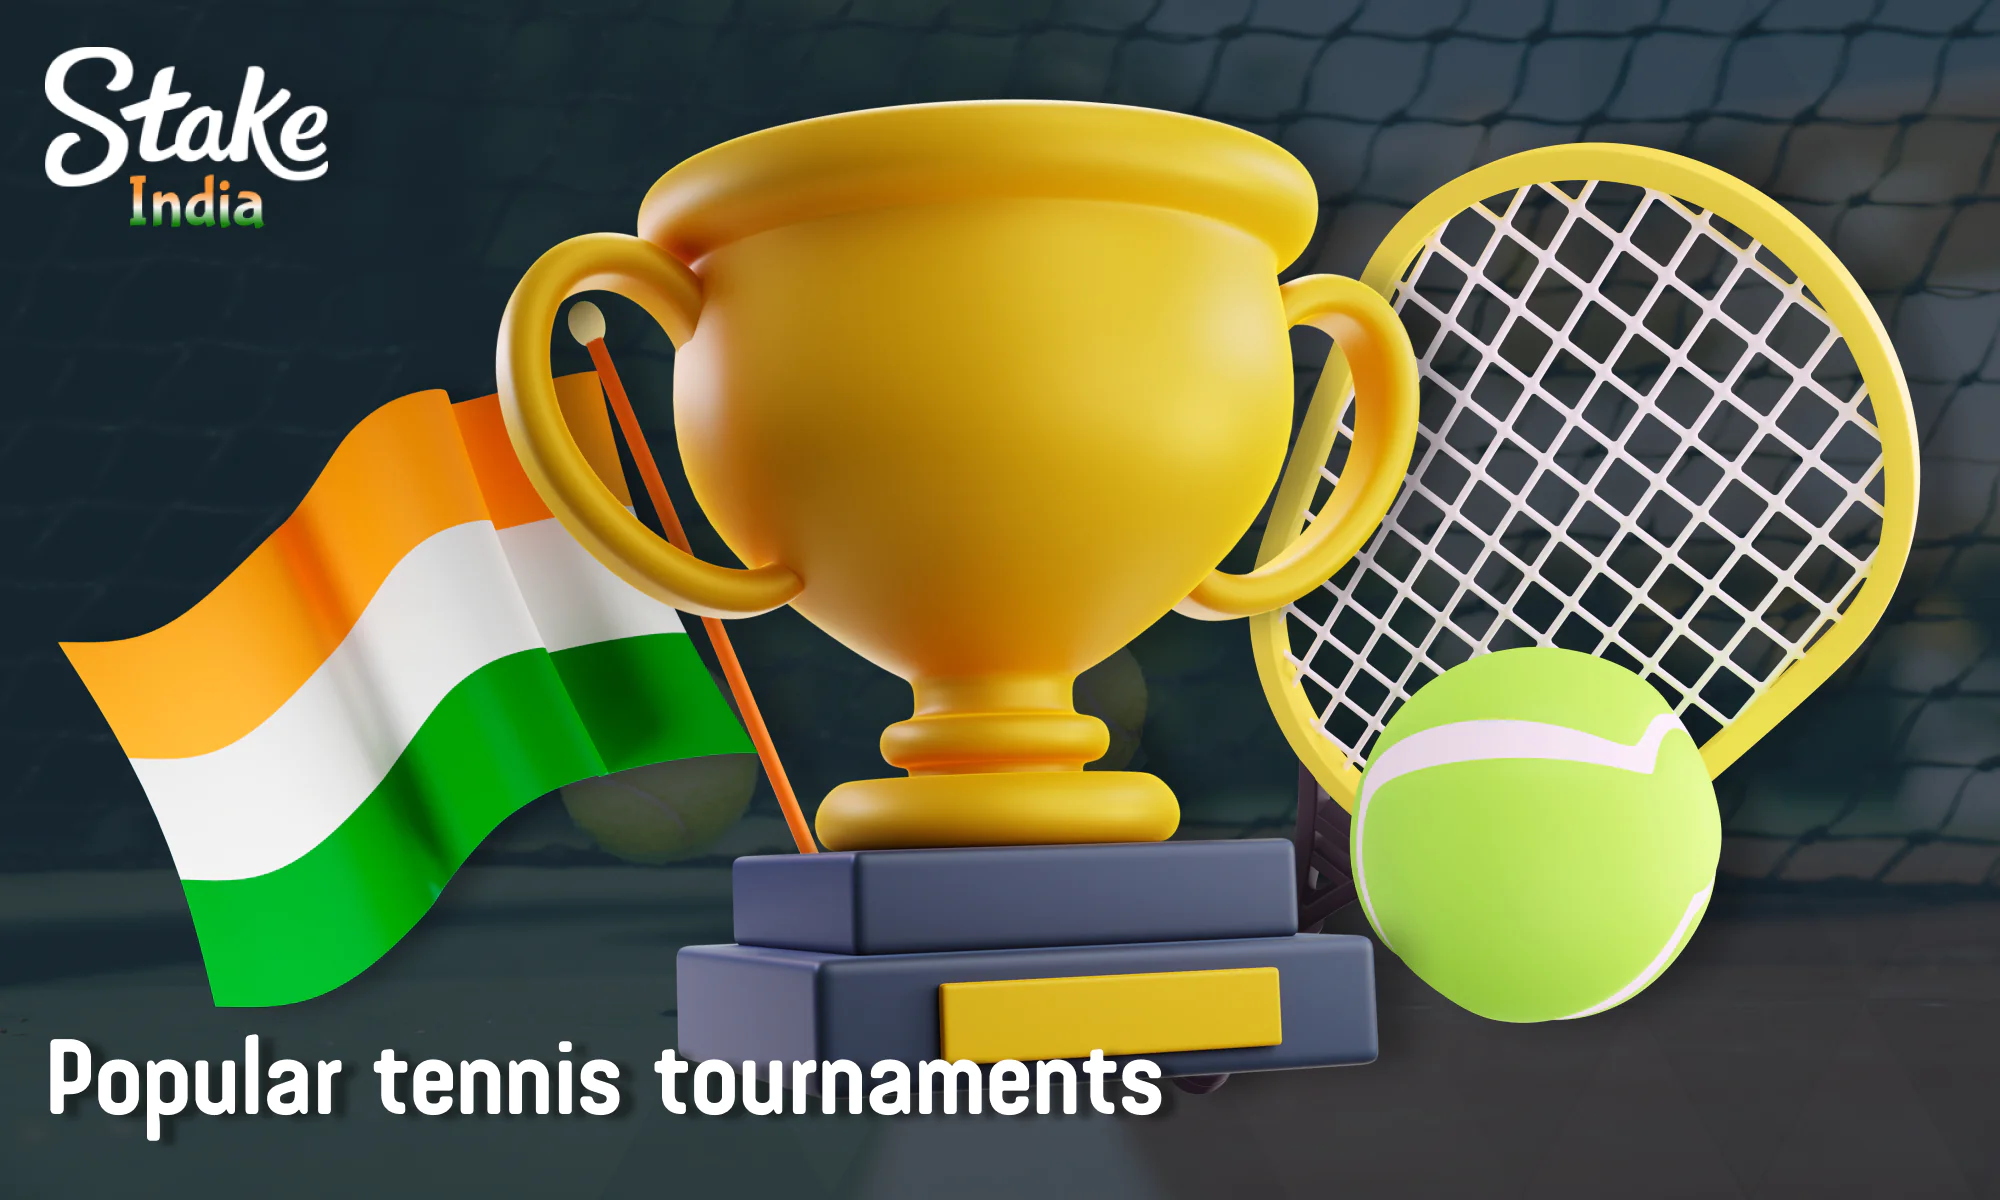 Popular tennis tournaments to bet on - Stake India